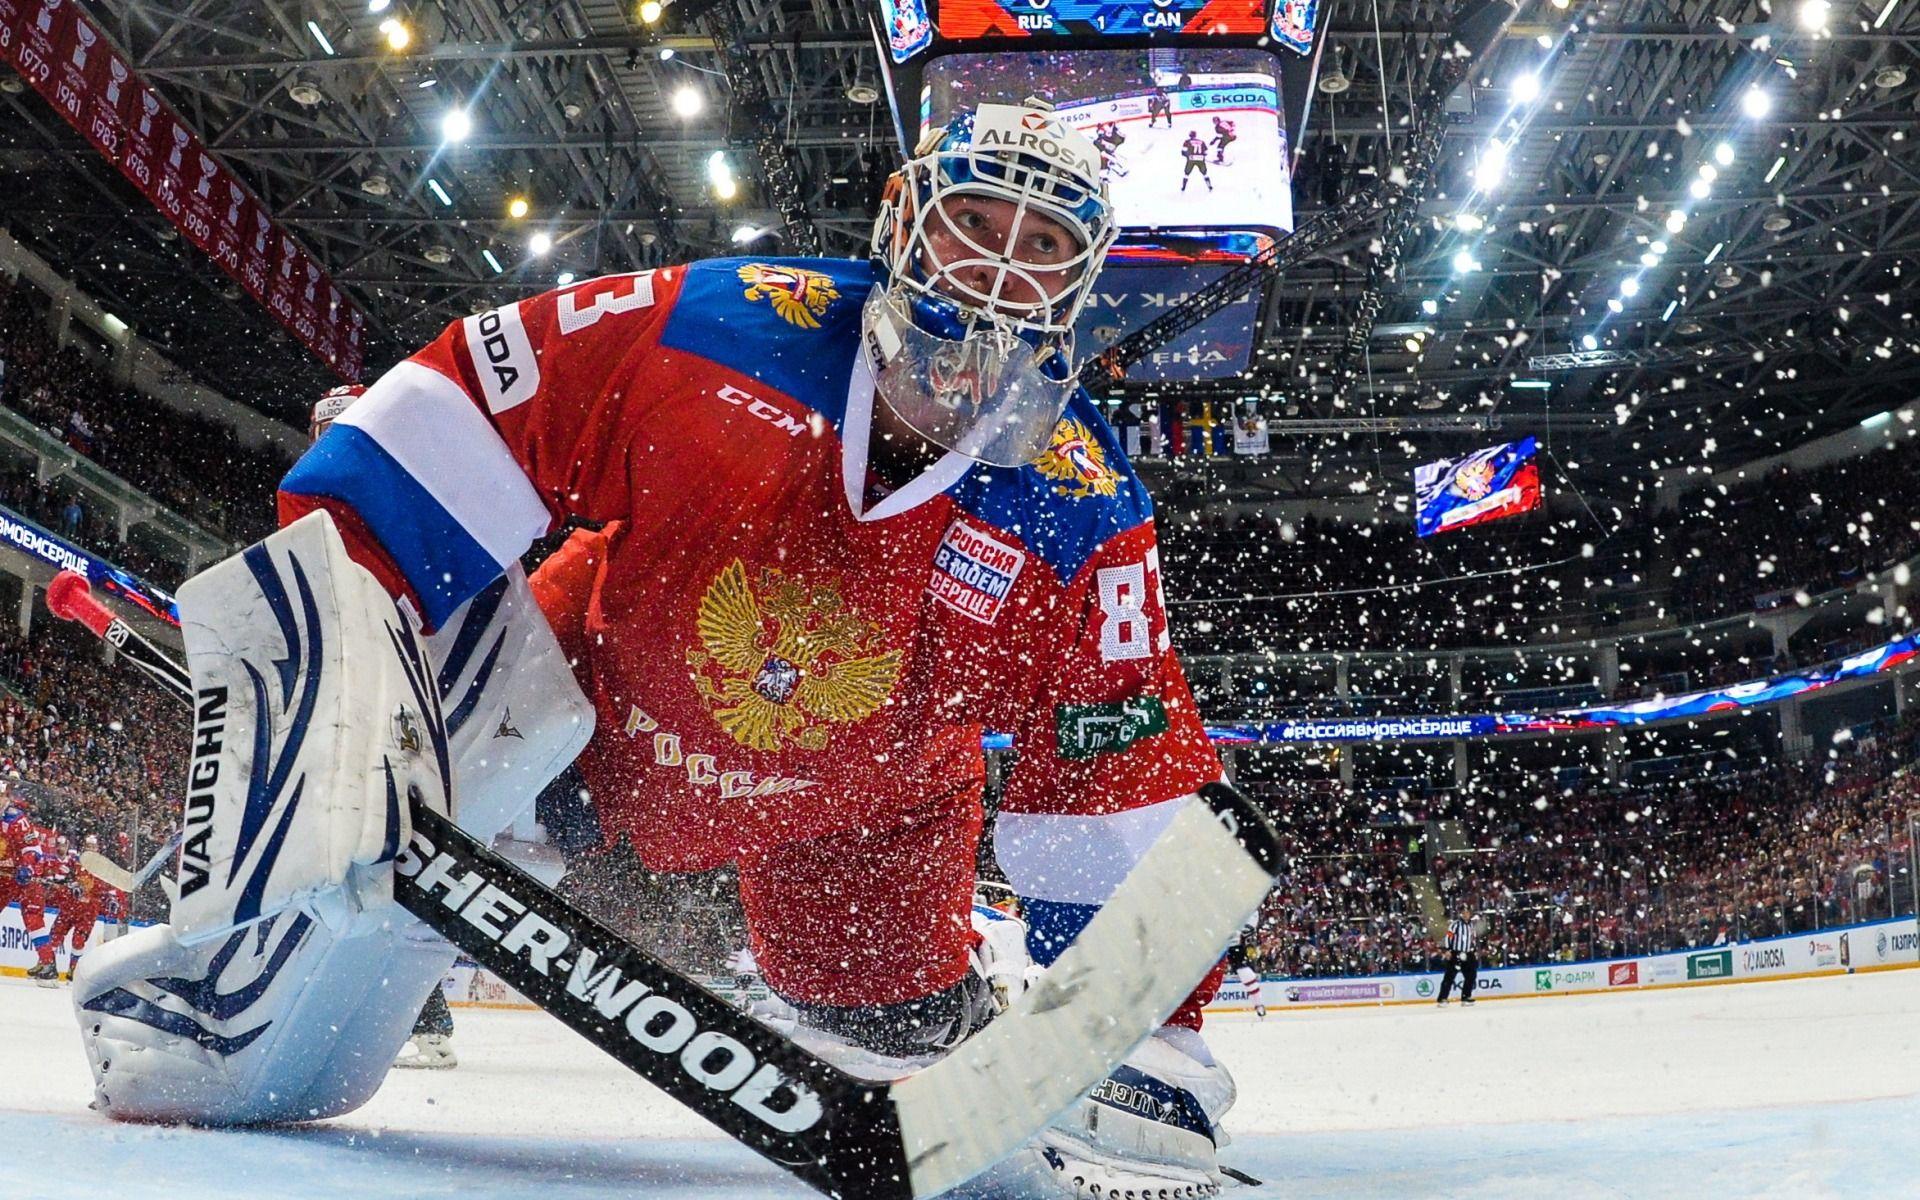 Download wallpaper Vasily Koshechkin, ice hockey goaltender